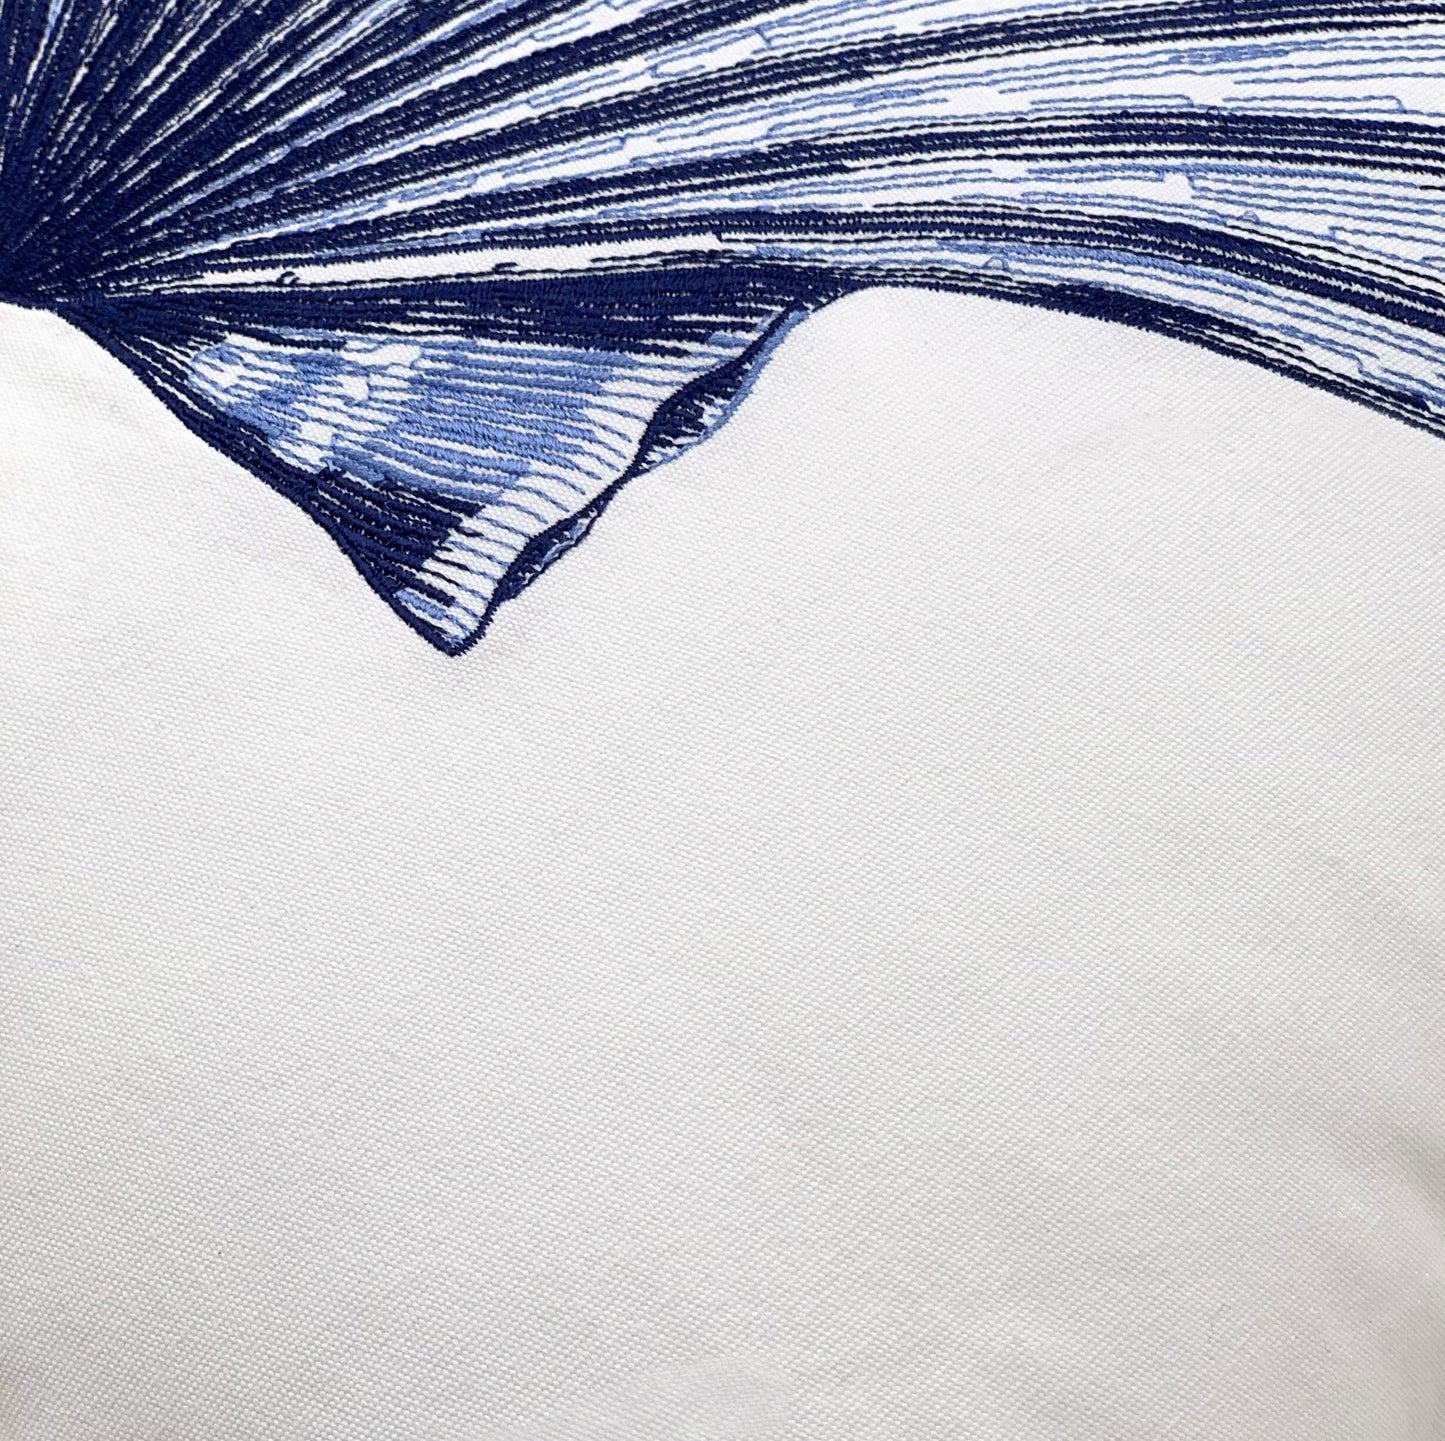 Detail shot of the Indigo Scallop Shell pillow's emboirdery.